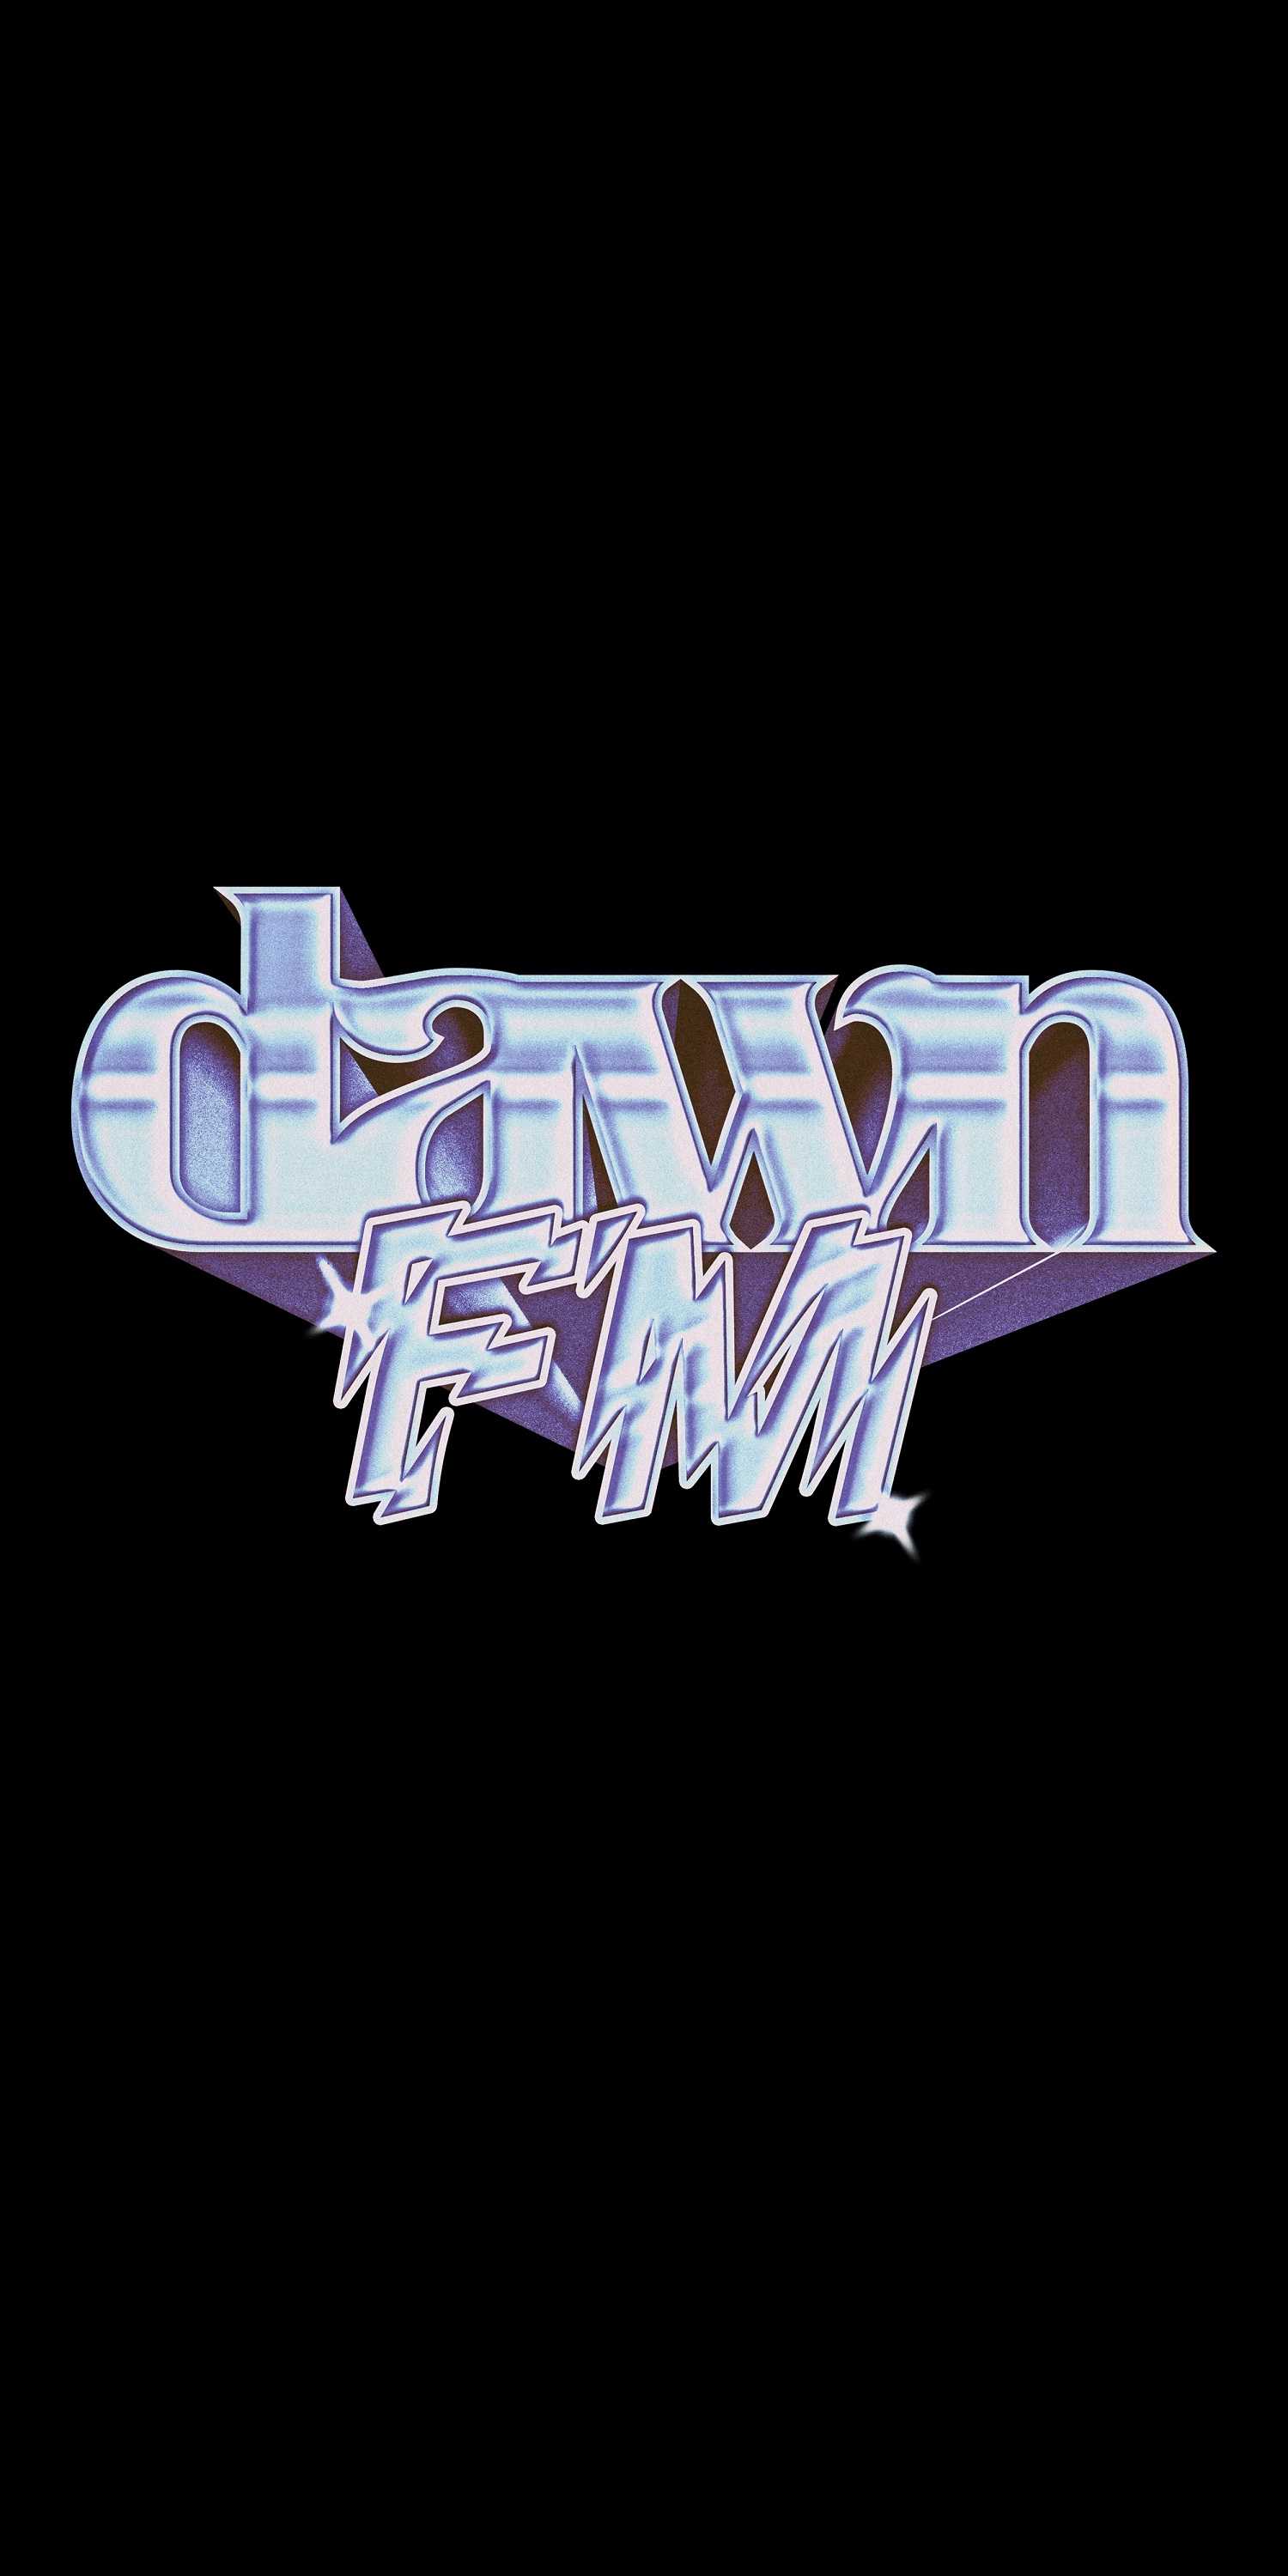 Mobile Dawn FM Wallpaper 1